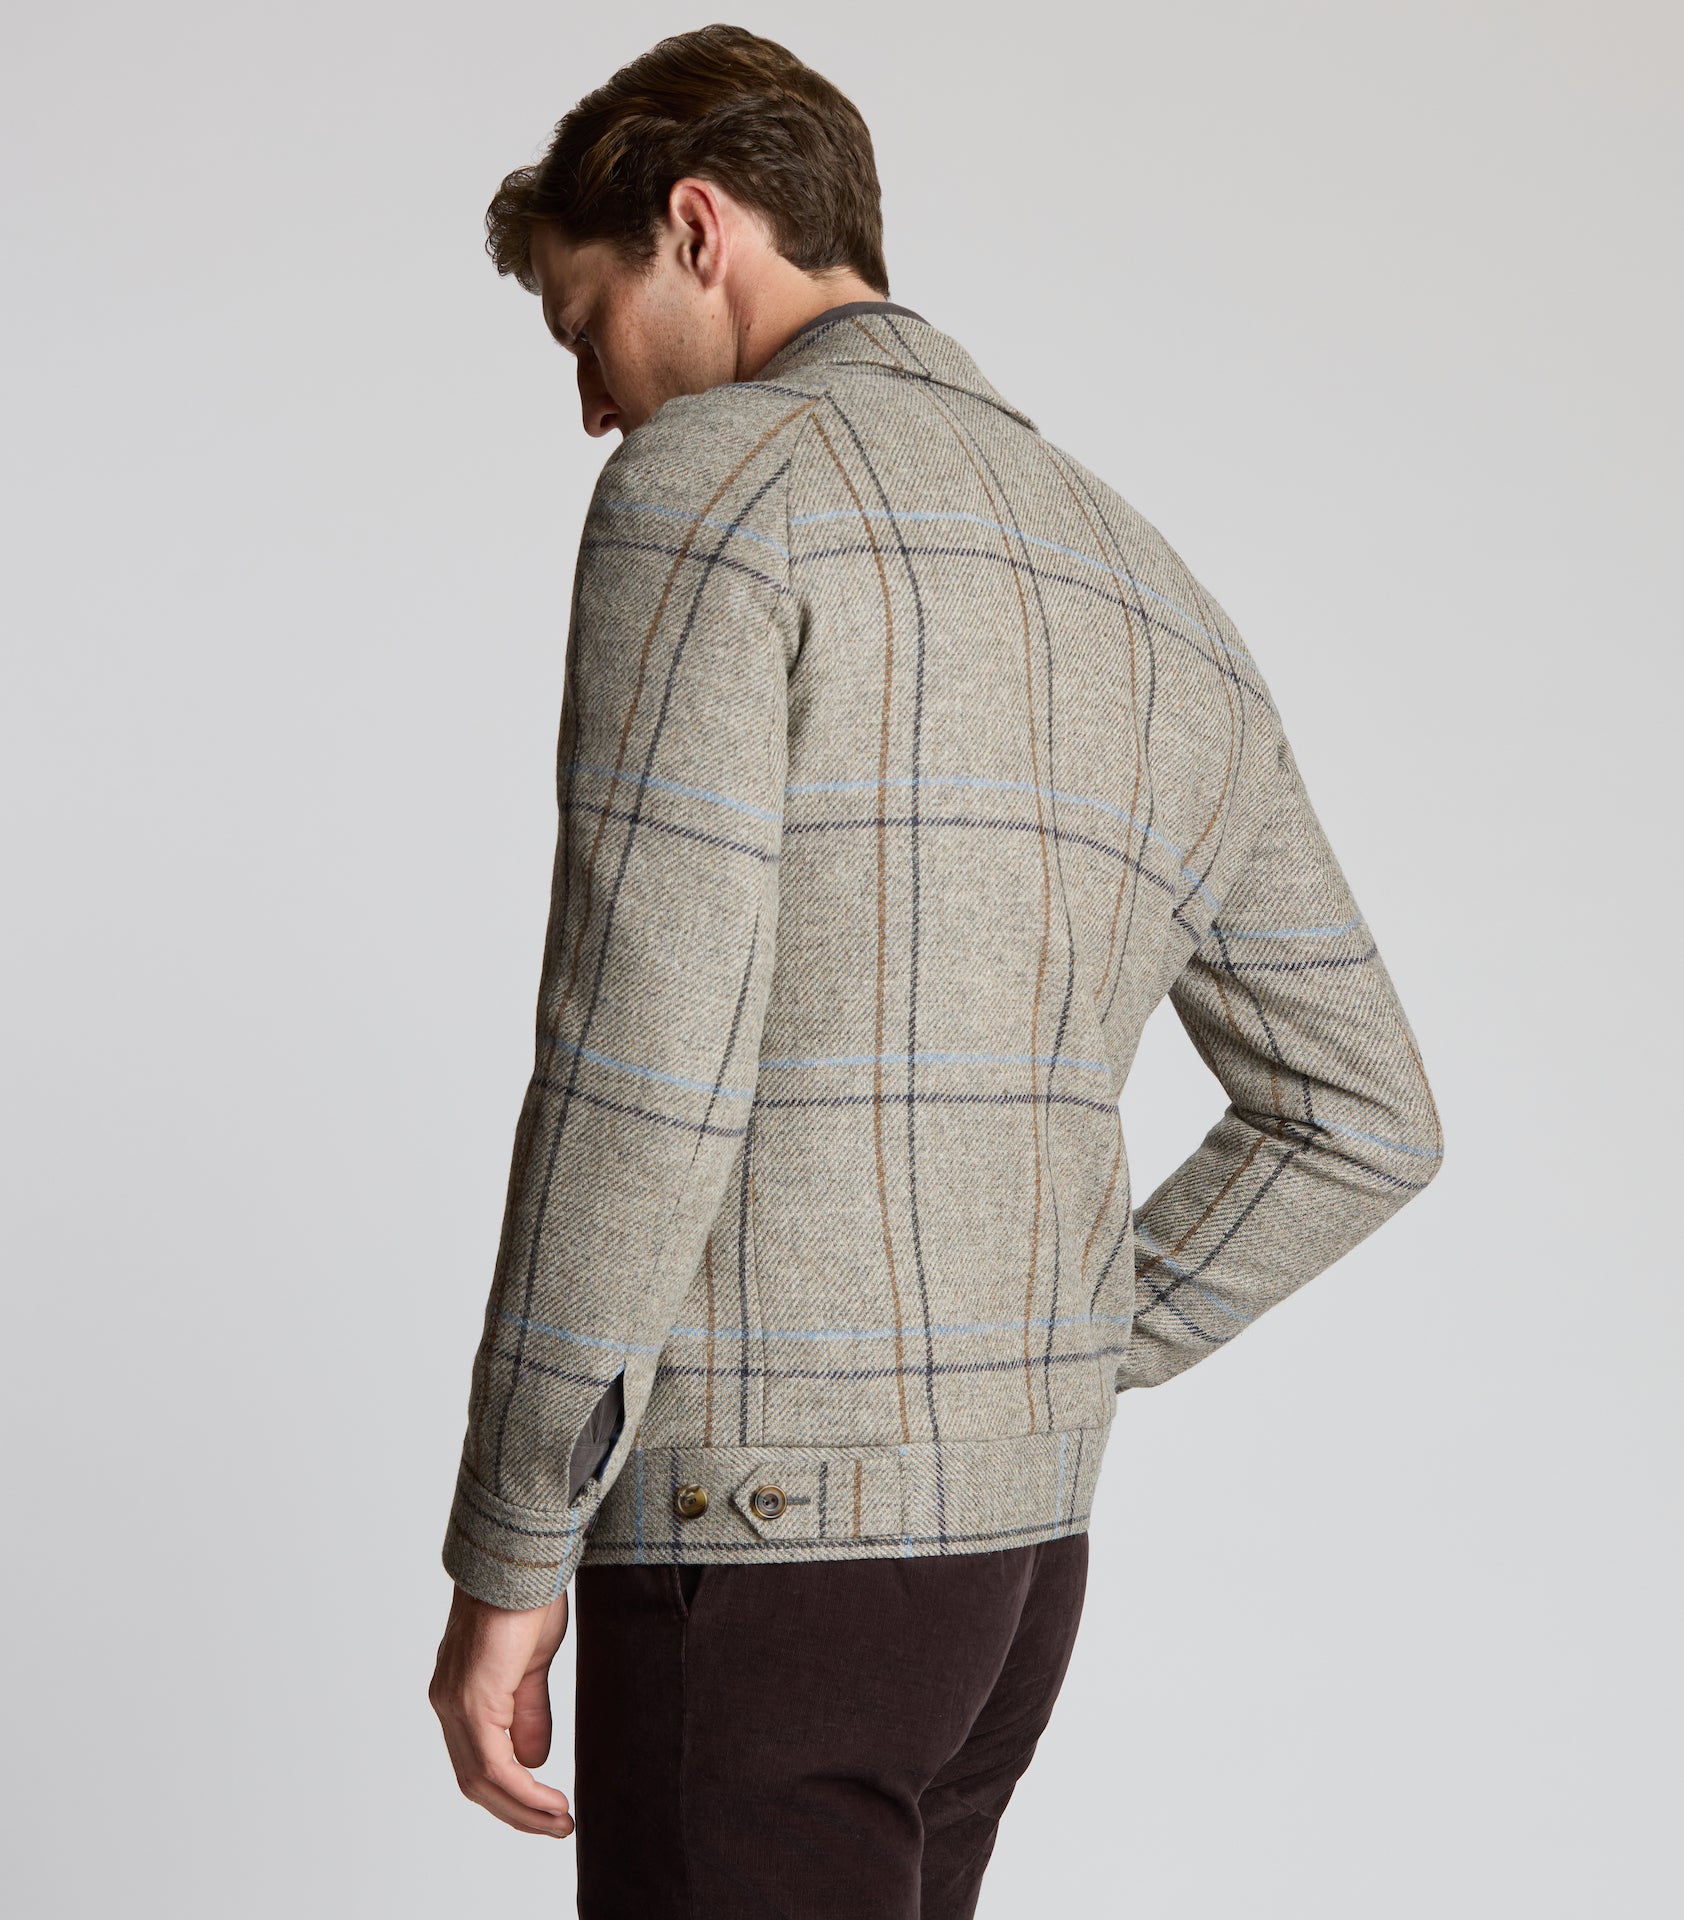 Brown Check Tweed Harrington Jacket